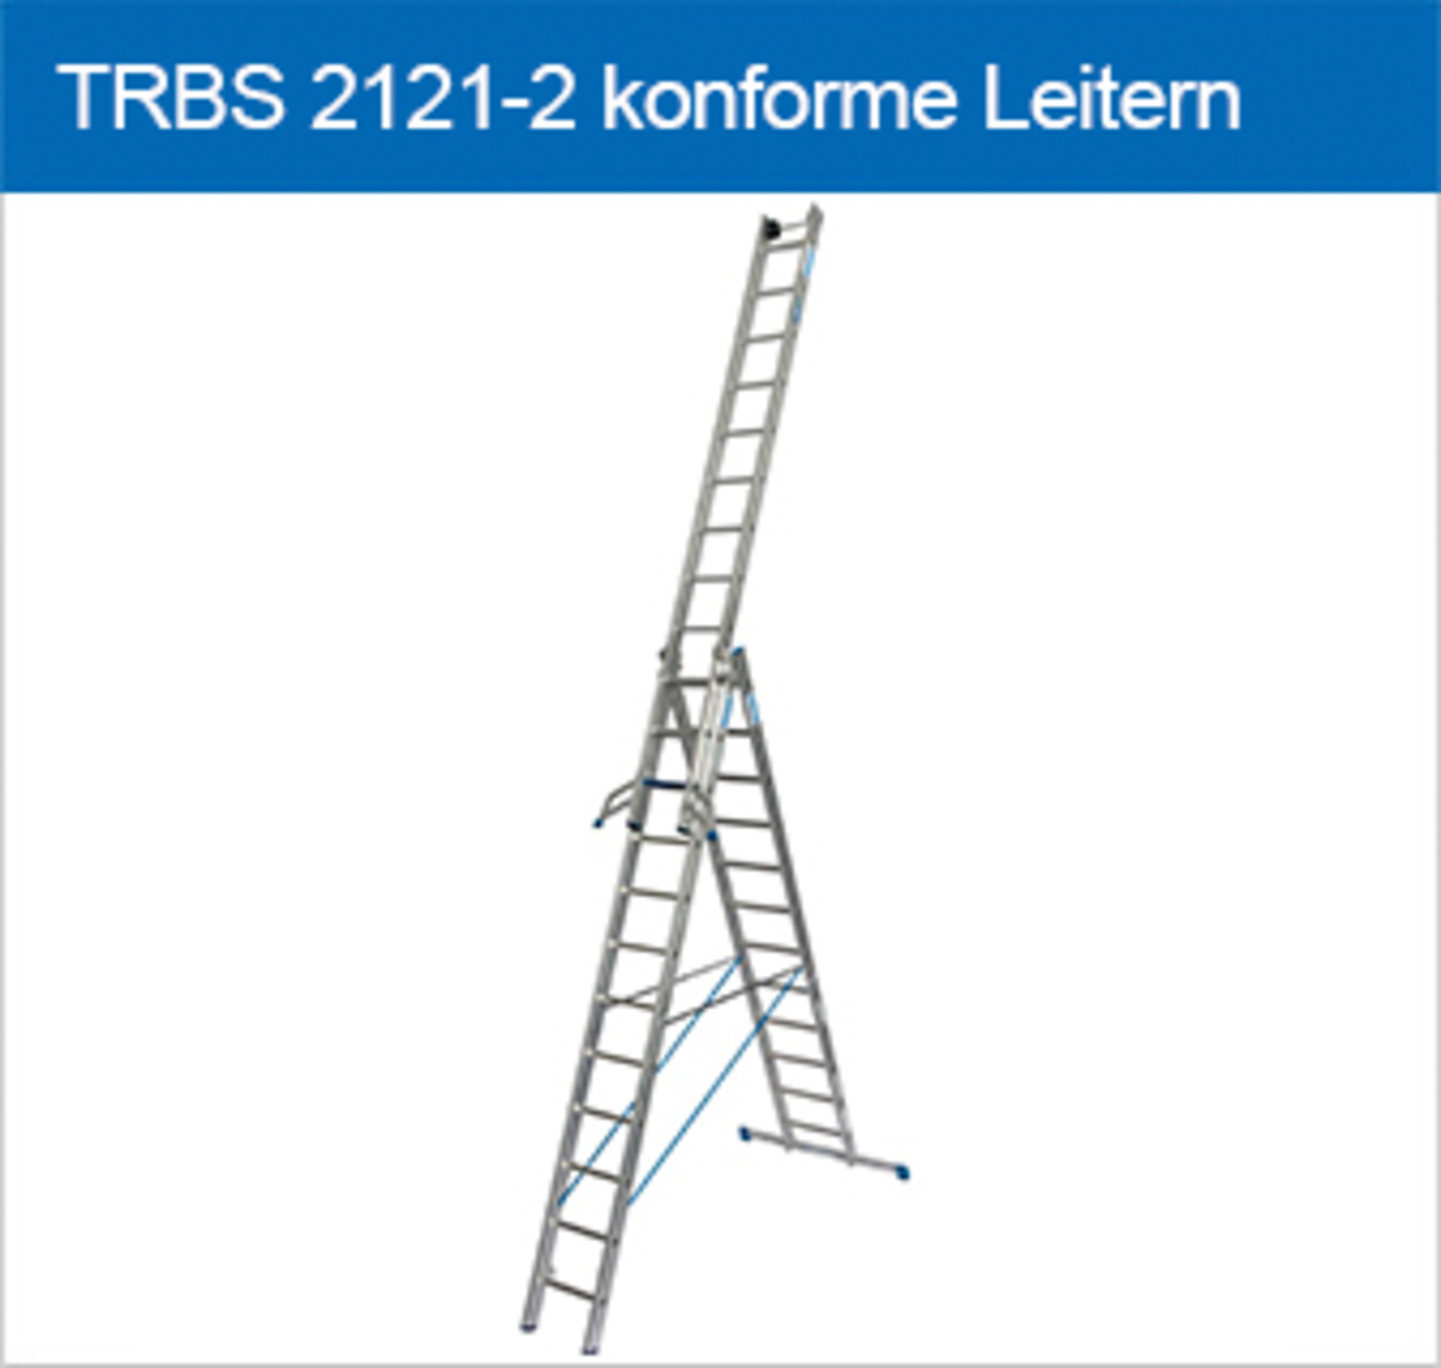 TRBS 2121-2 konforme Leitern